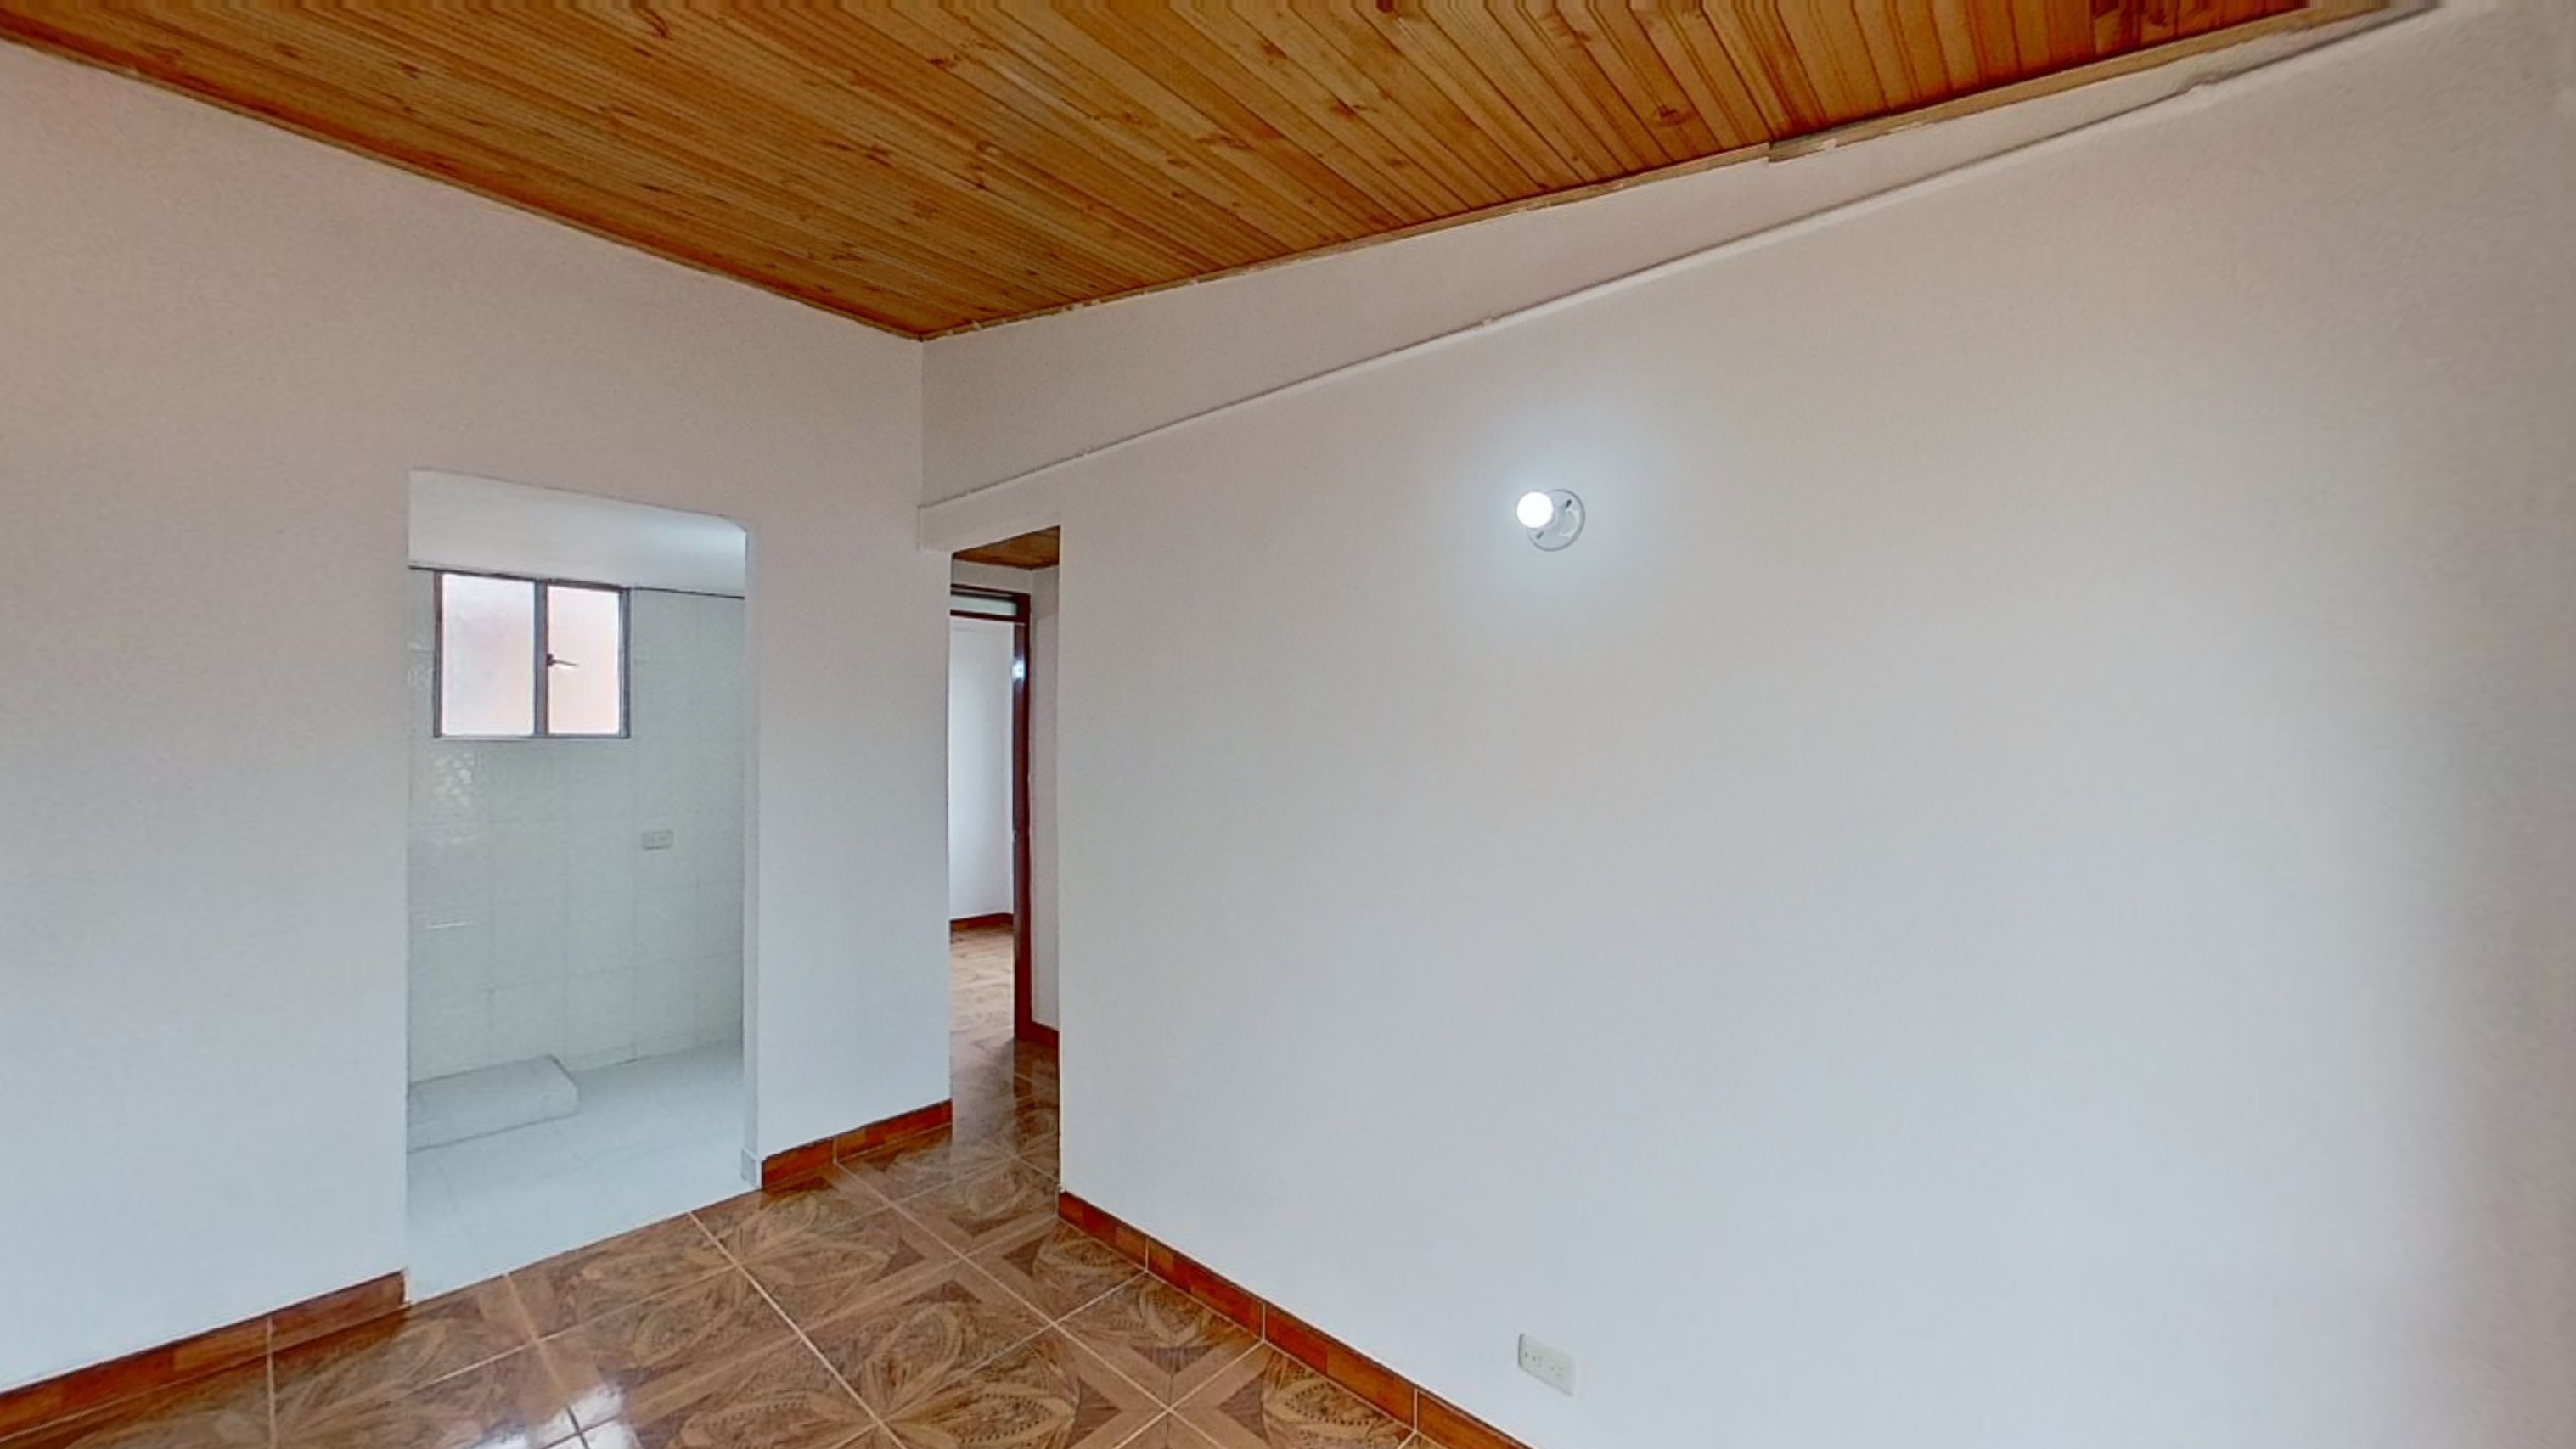 Apartamento en Venta en Cundinamarca, BOGOTÁ, Dintalito